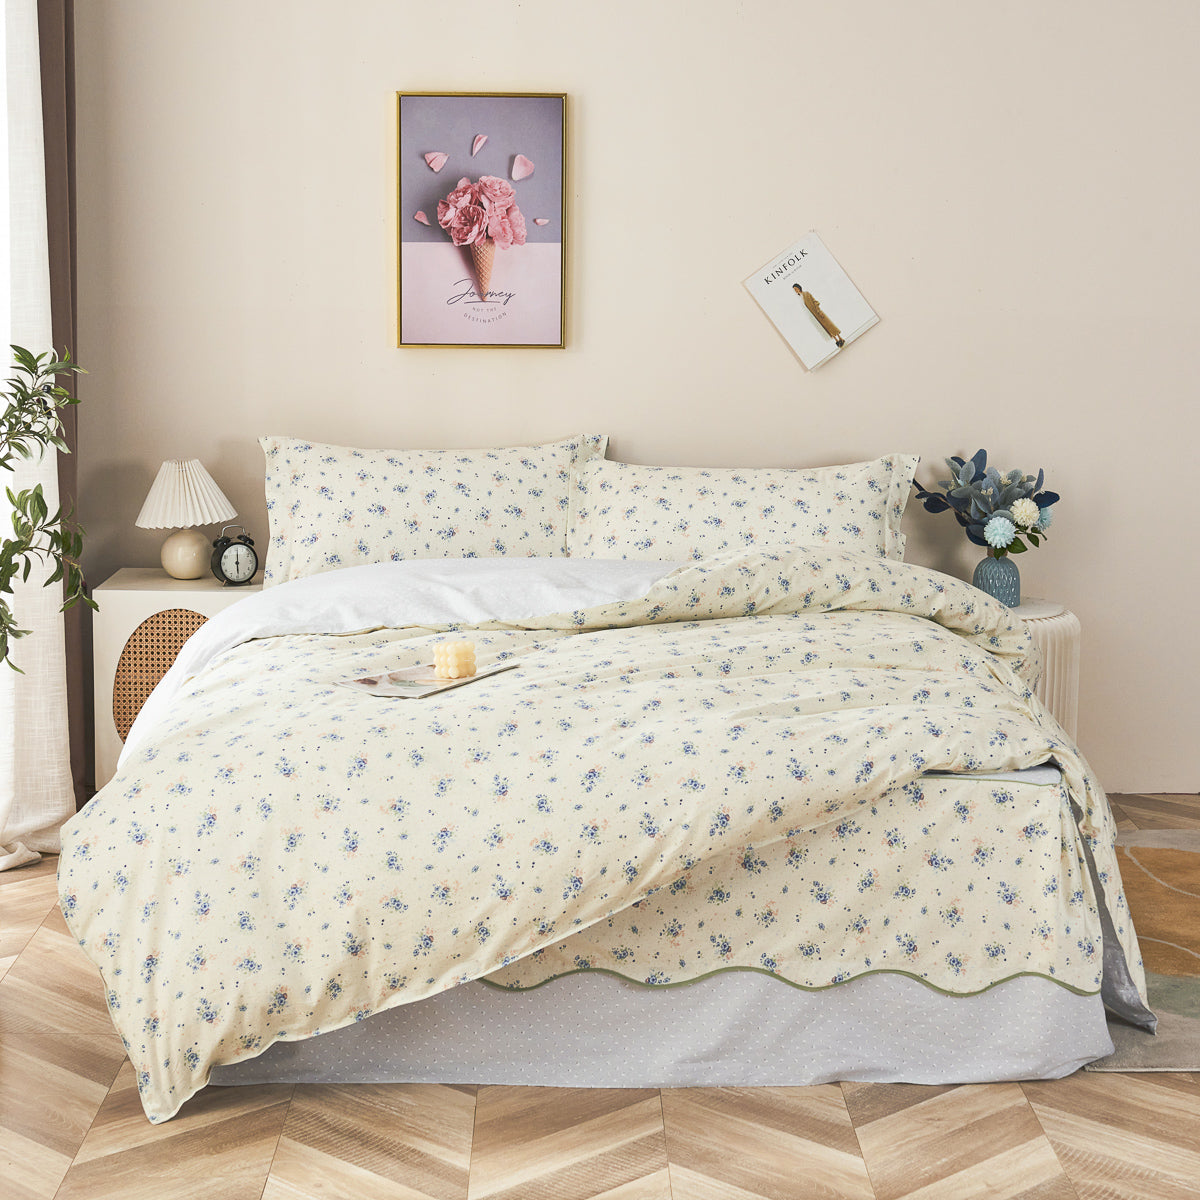 Queen Bedding Size Cotton Sheets Twin Bed Set Colchas De Cama